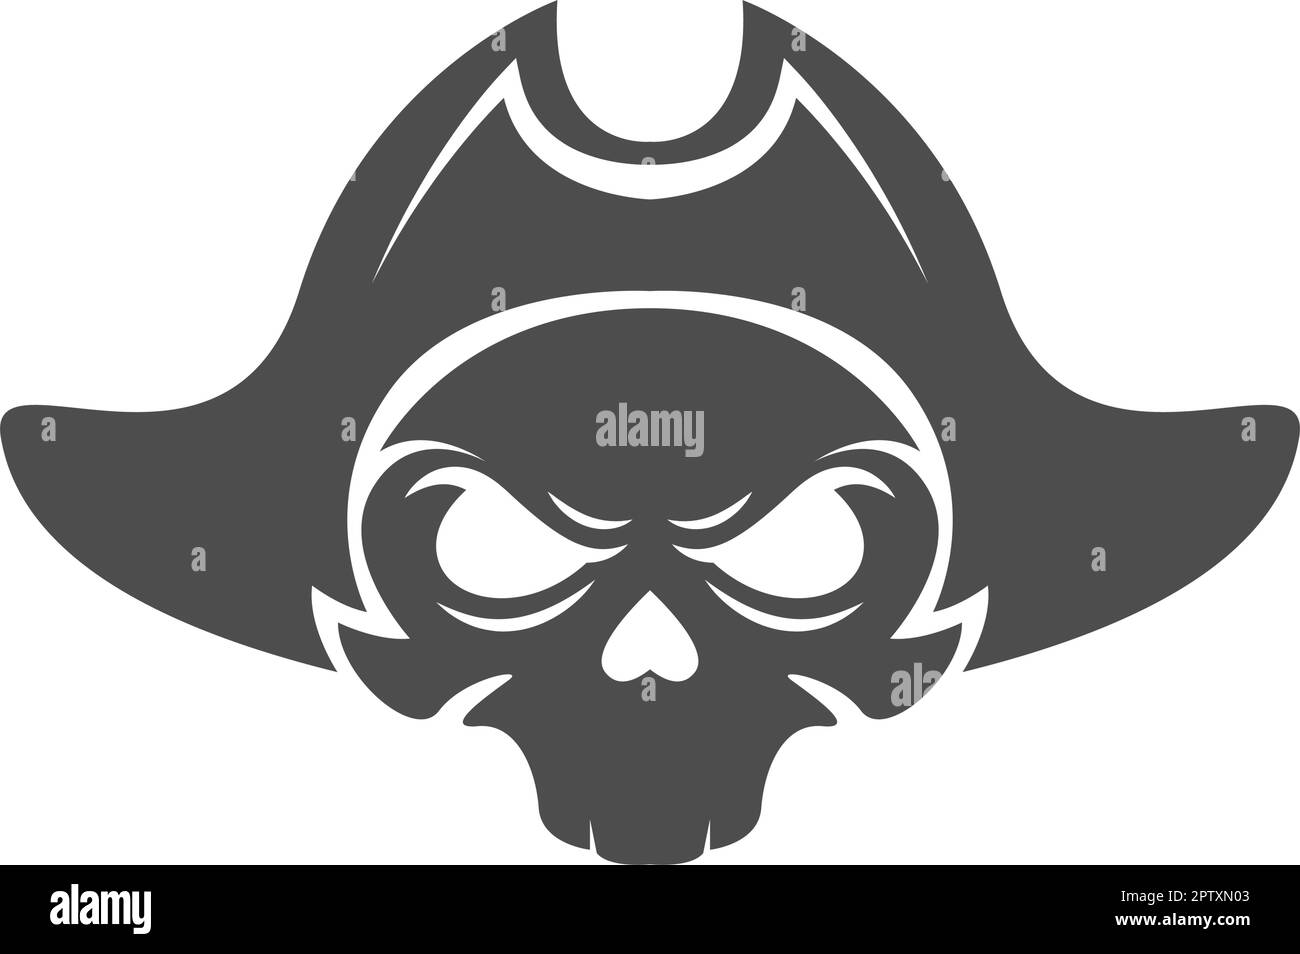 Pirate logo icon design illustration Stock Vector Image & Art - Alamy